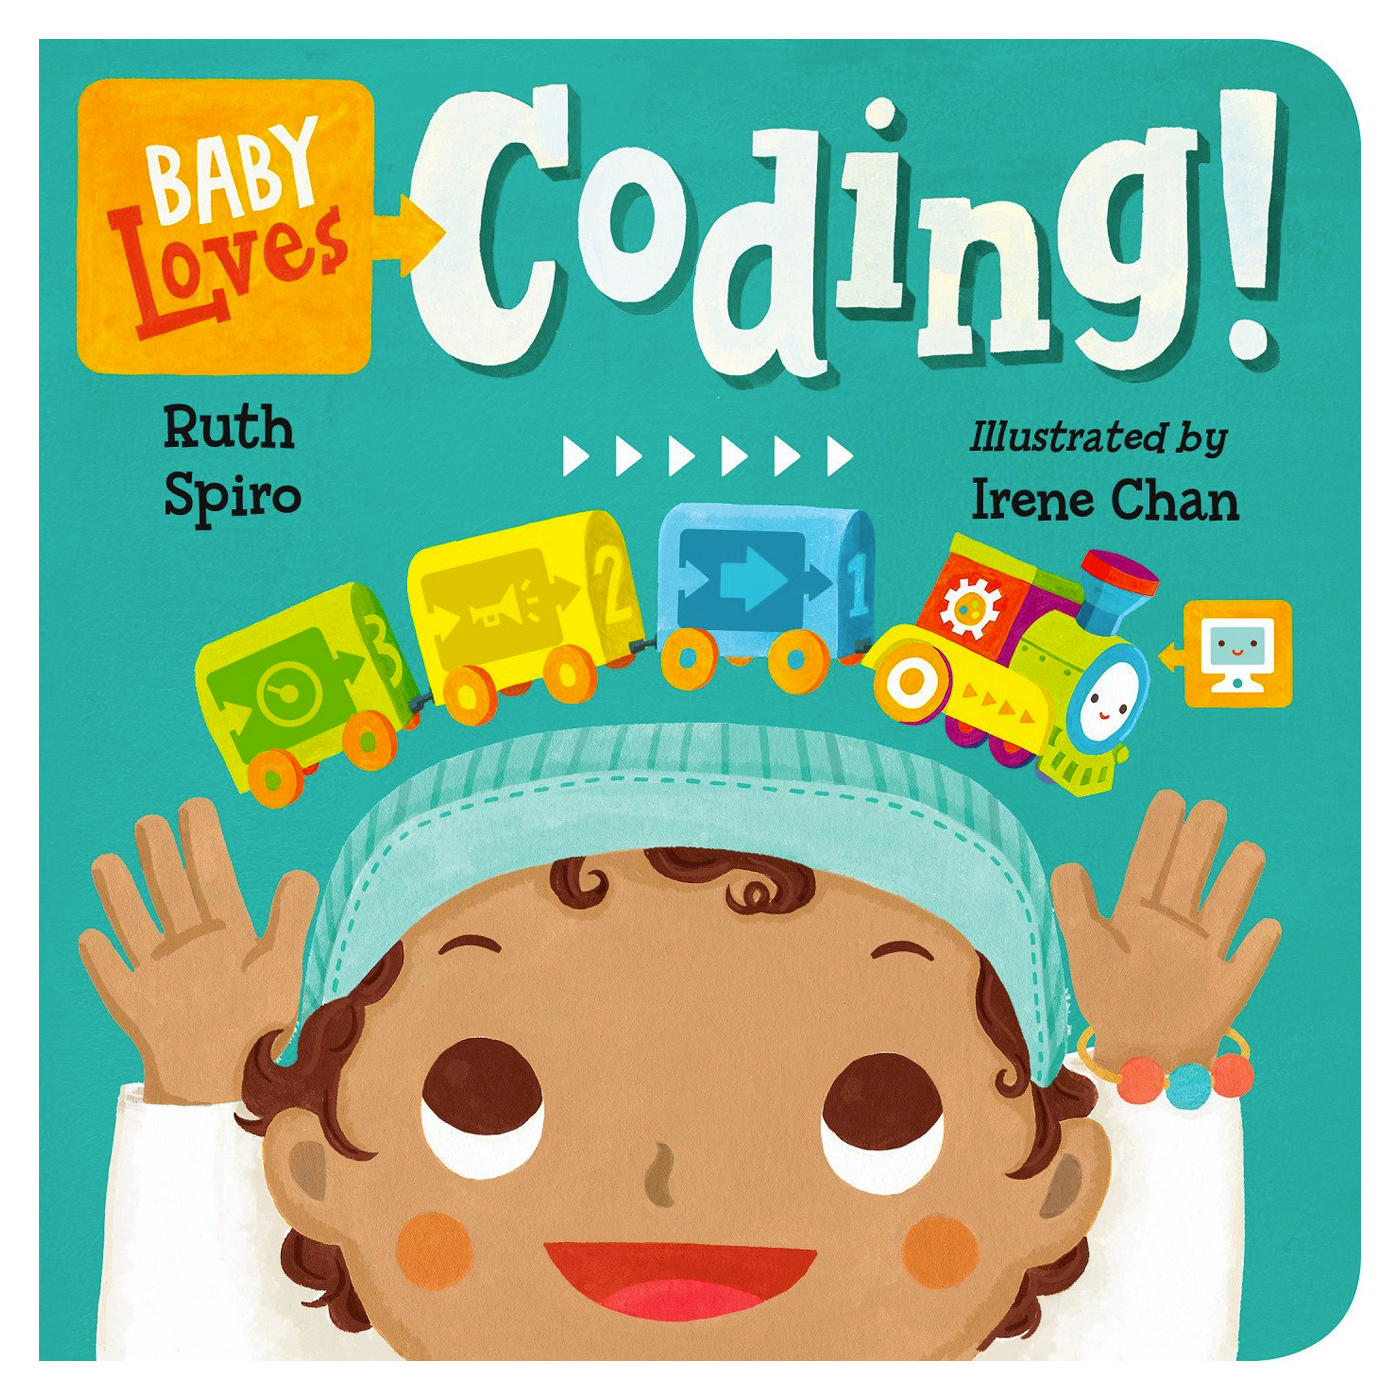  Baby Loves Coding